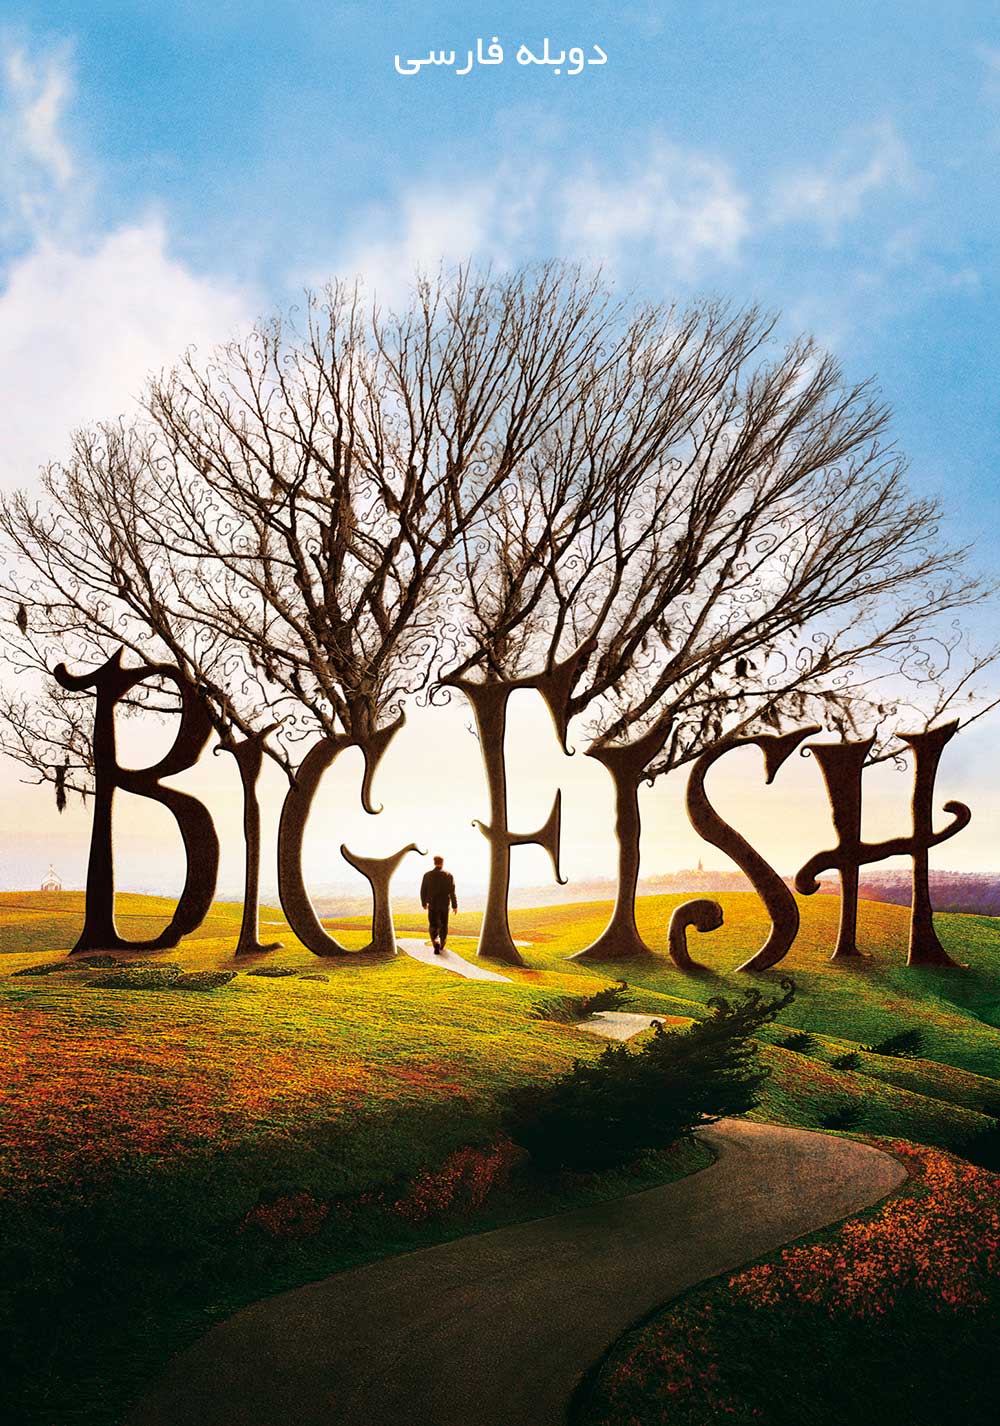 Big Fish - دانلود فیلم خارجی Big Fish دوبله فارسی با لینک مستقیم